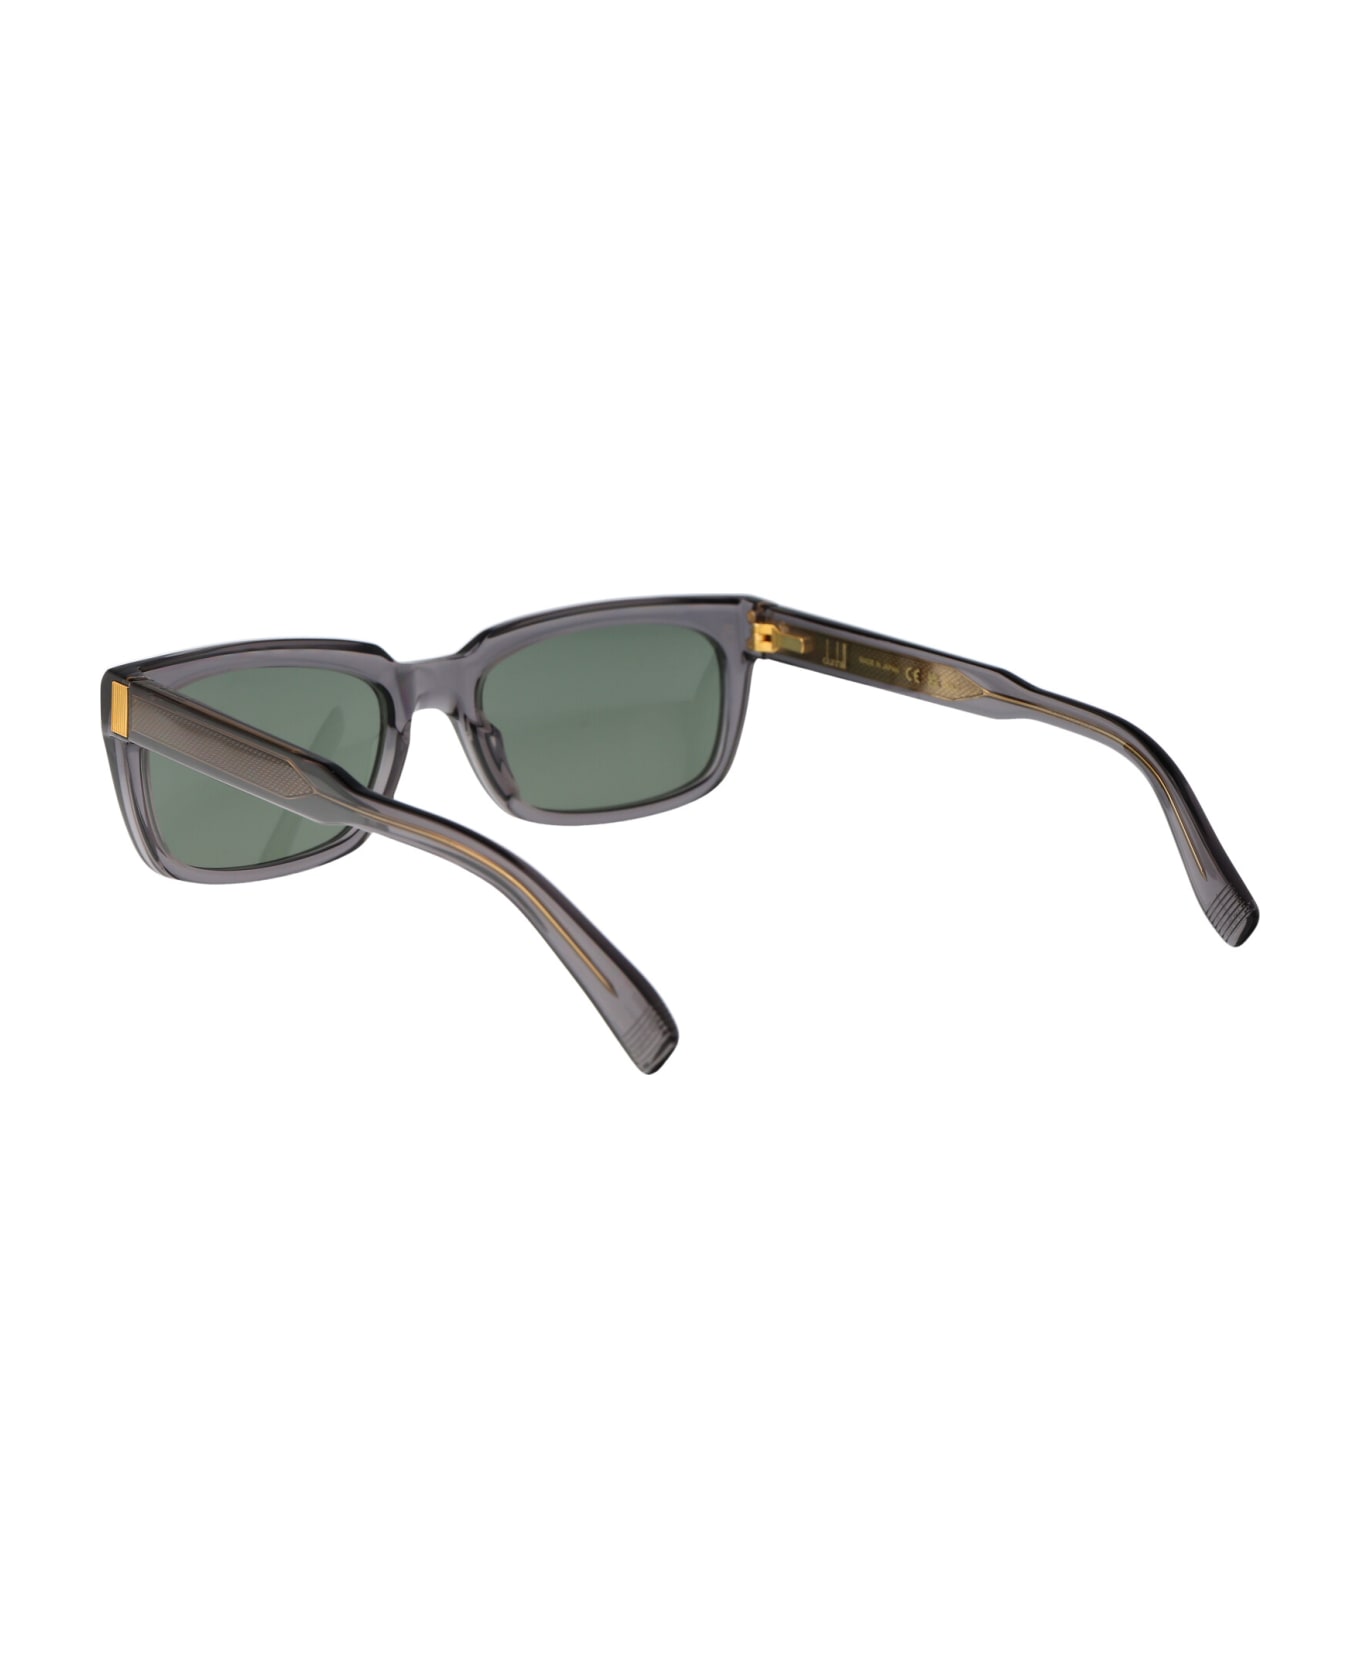 Dunhill Du0056s Sunglasses - 003 GREY GREY GREEN